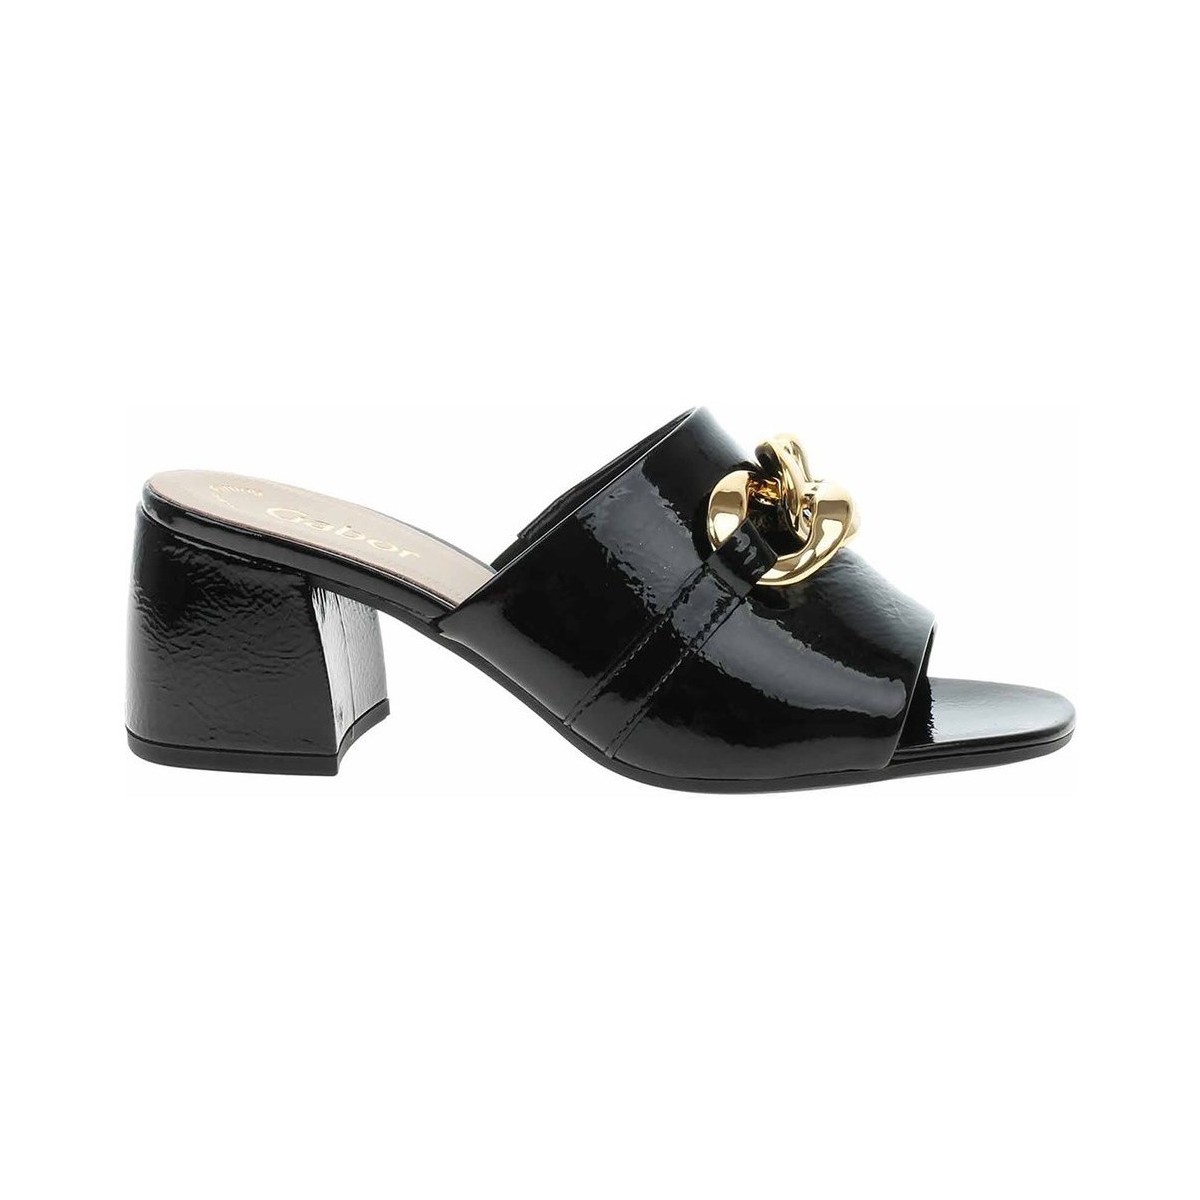 Chaussures Femme Tongs Gabor 8171297 Noir